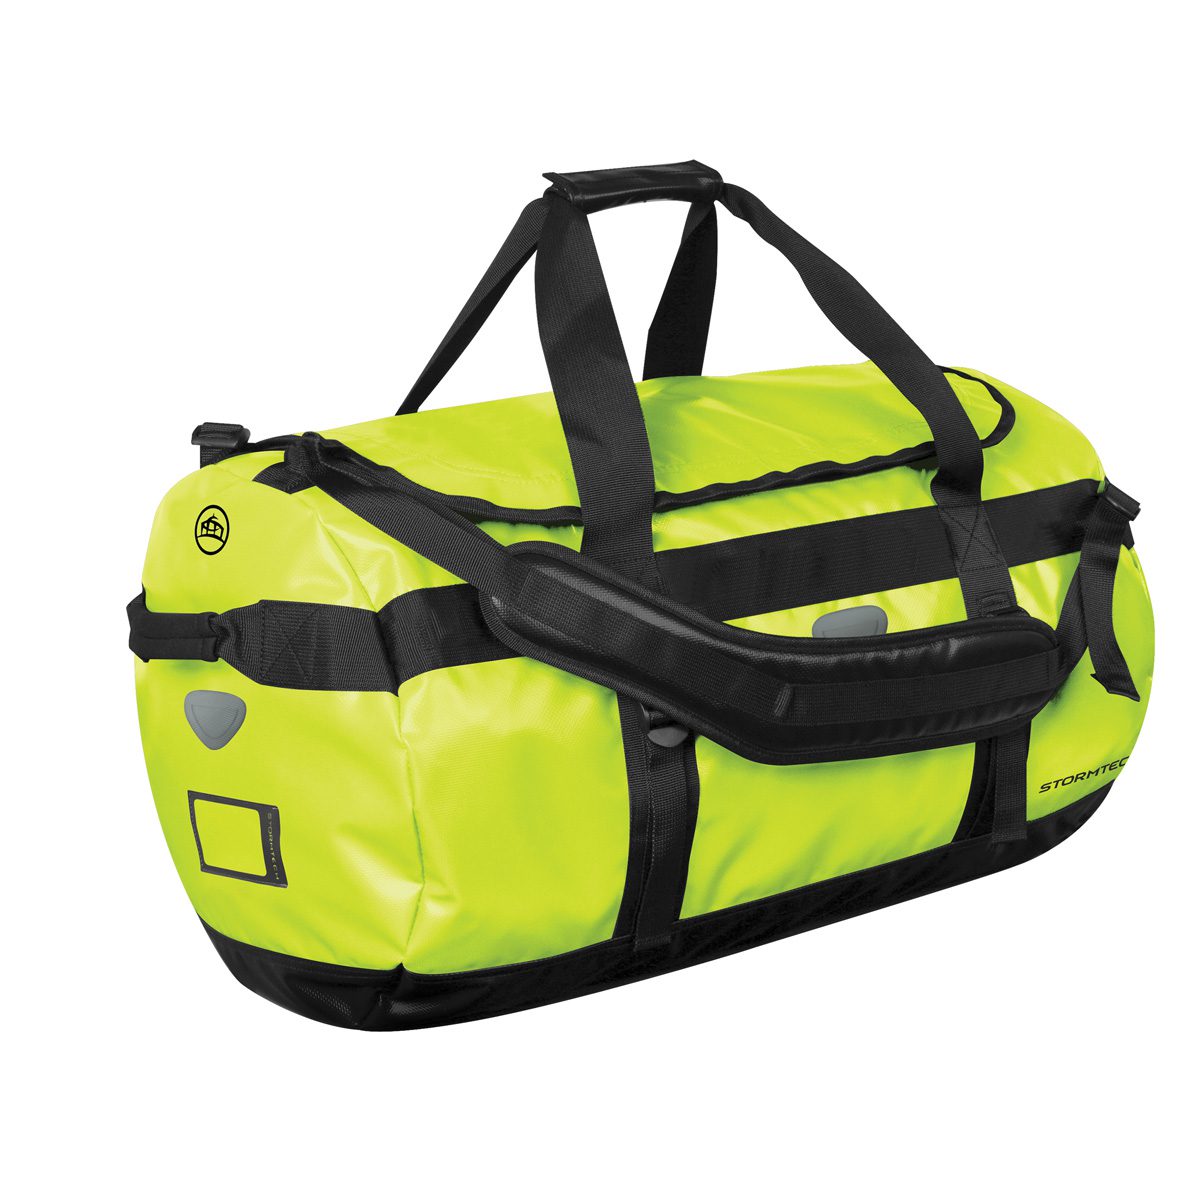 Stormtech Atlantis Waterproof Gear Bag - Large #GBW-1LLE Hi Vis Green